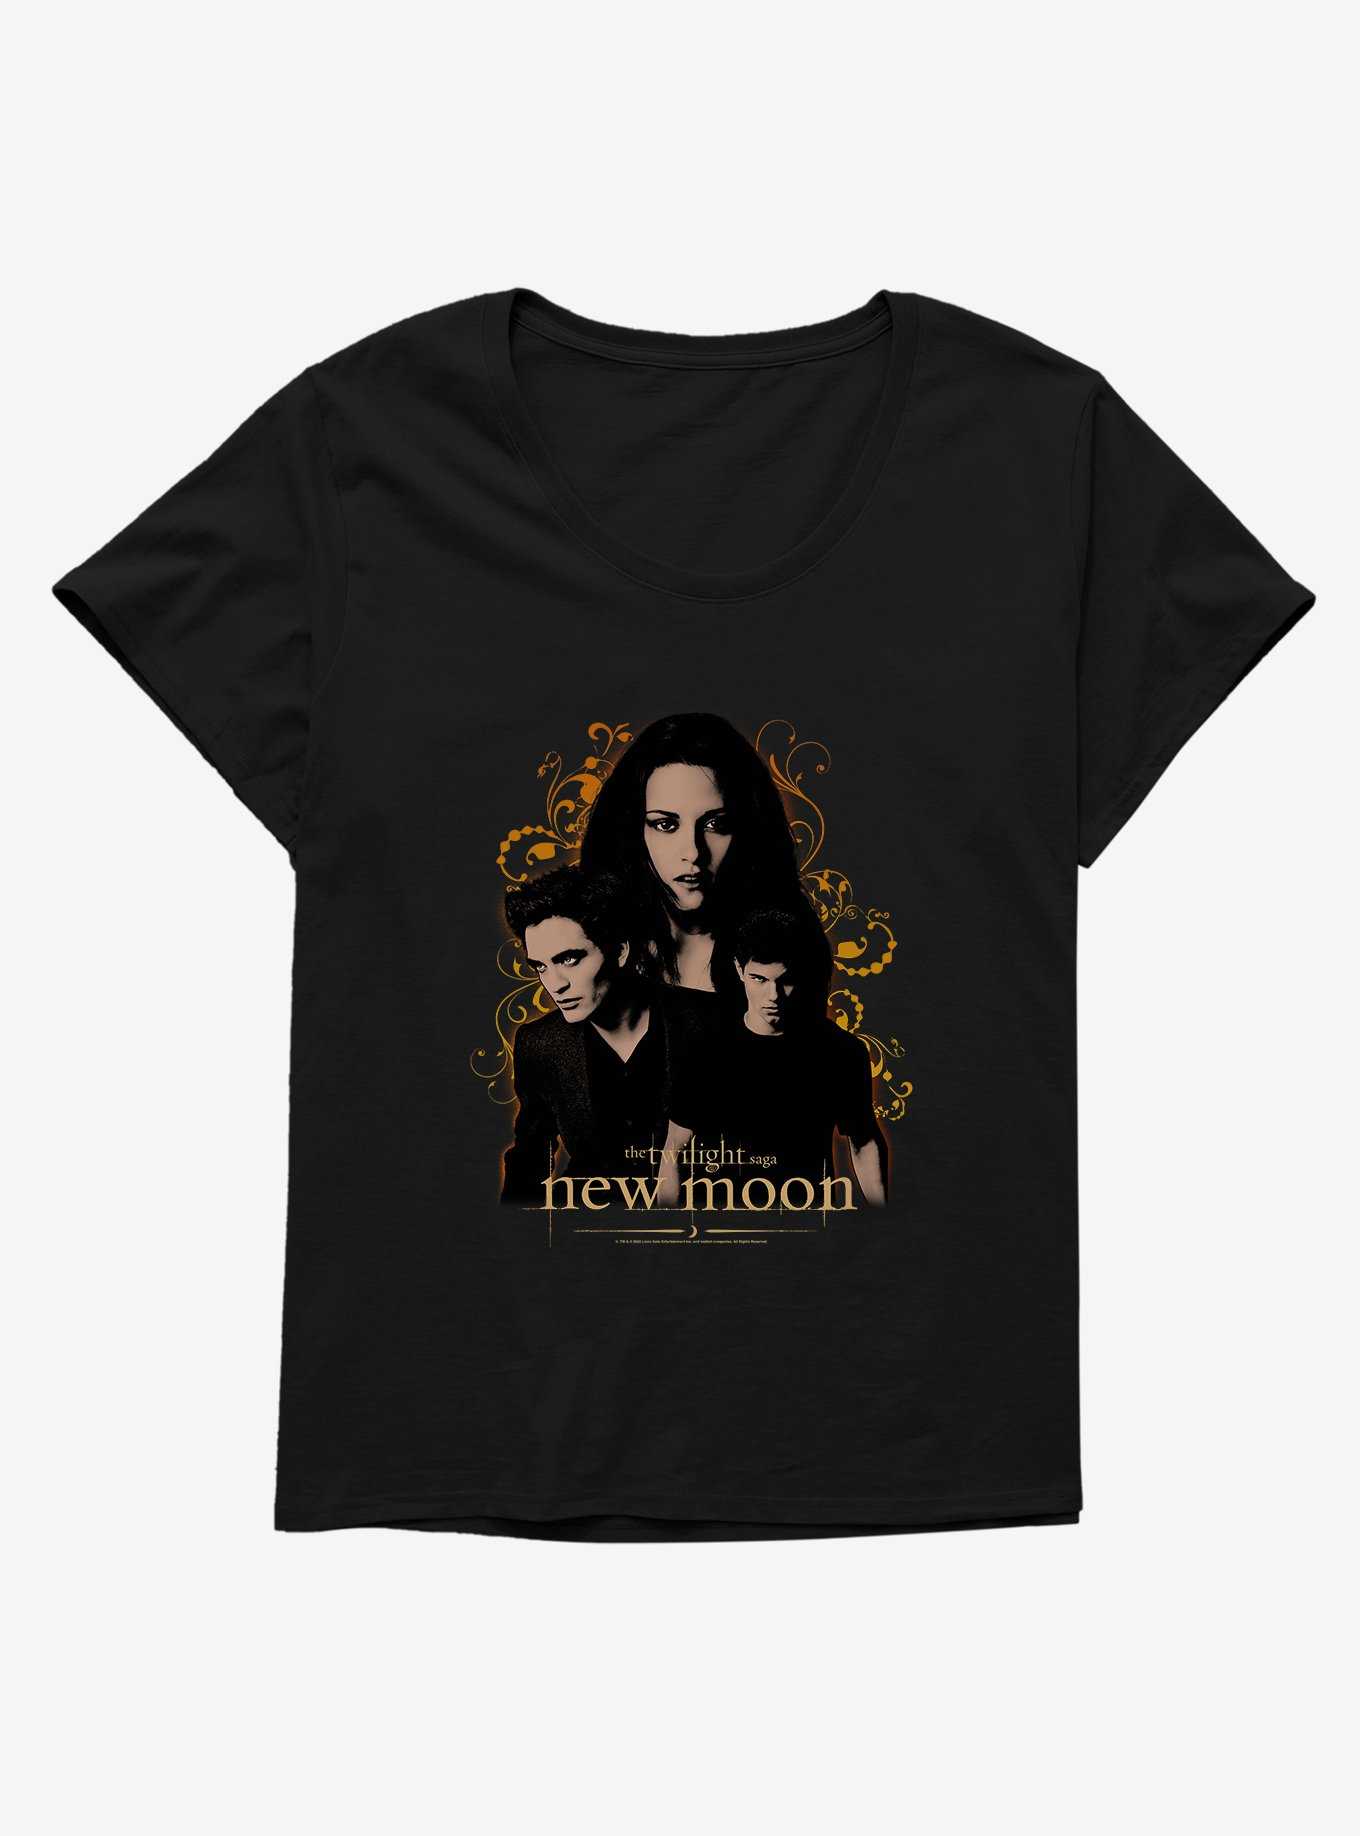 Custom Team Edward Twilight Shirt, Twilight Saga Women's Pajamas